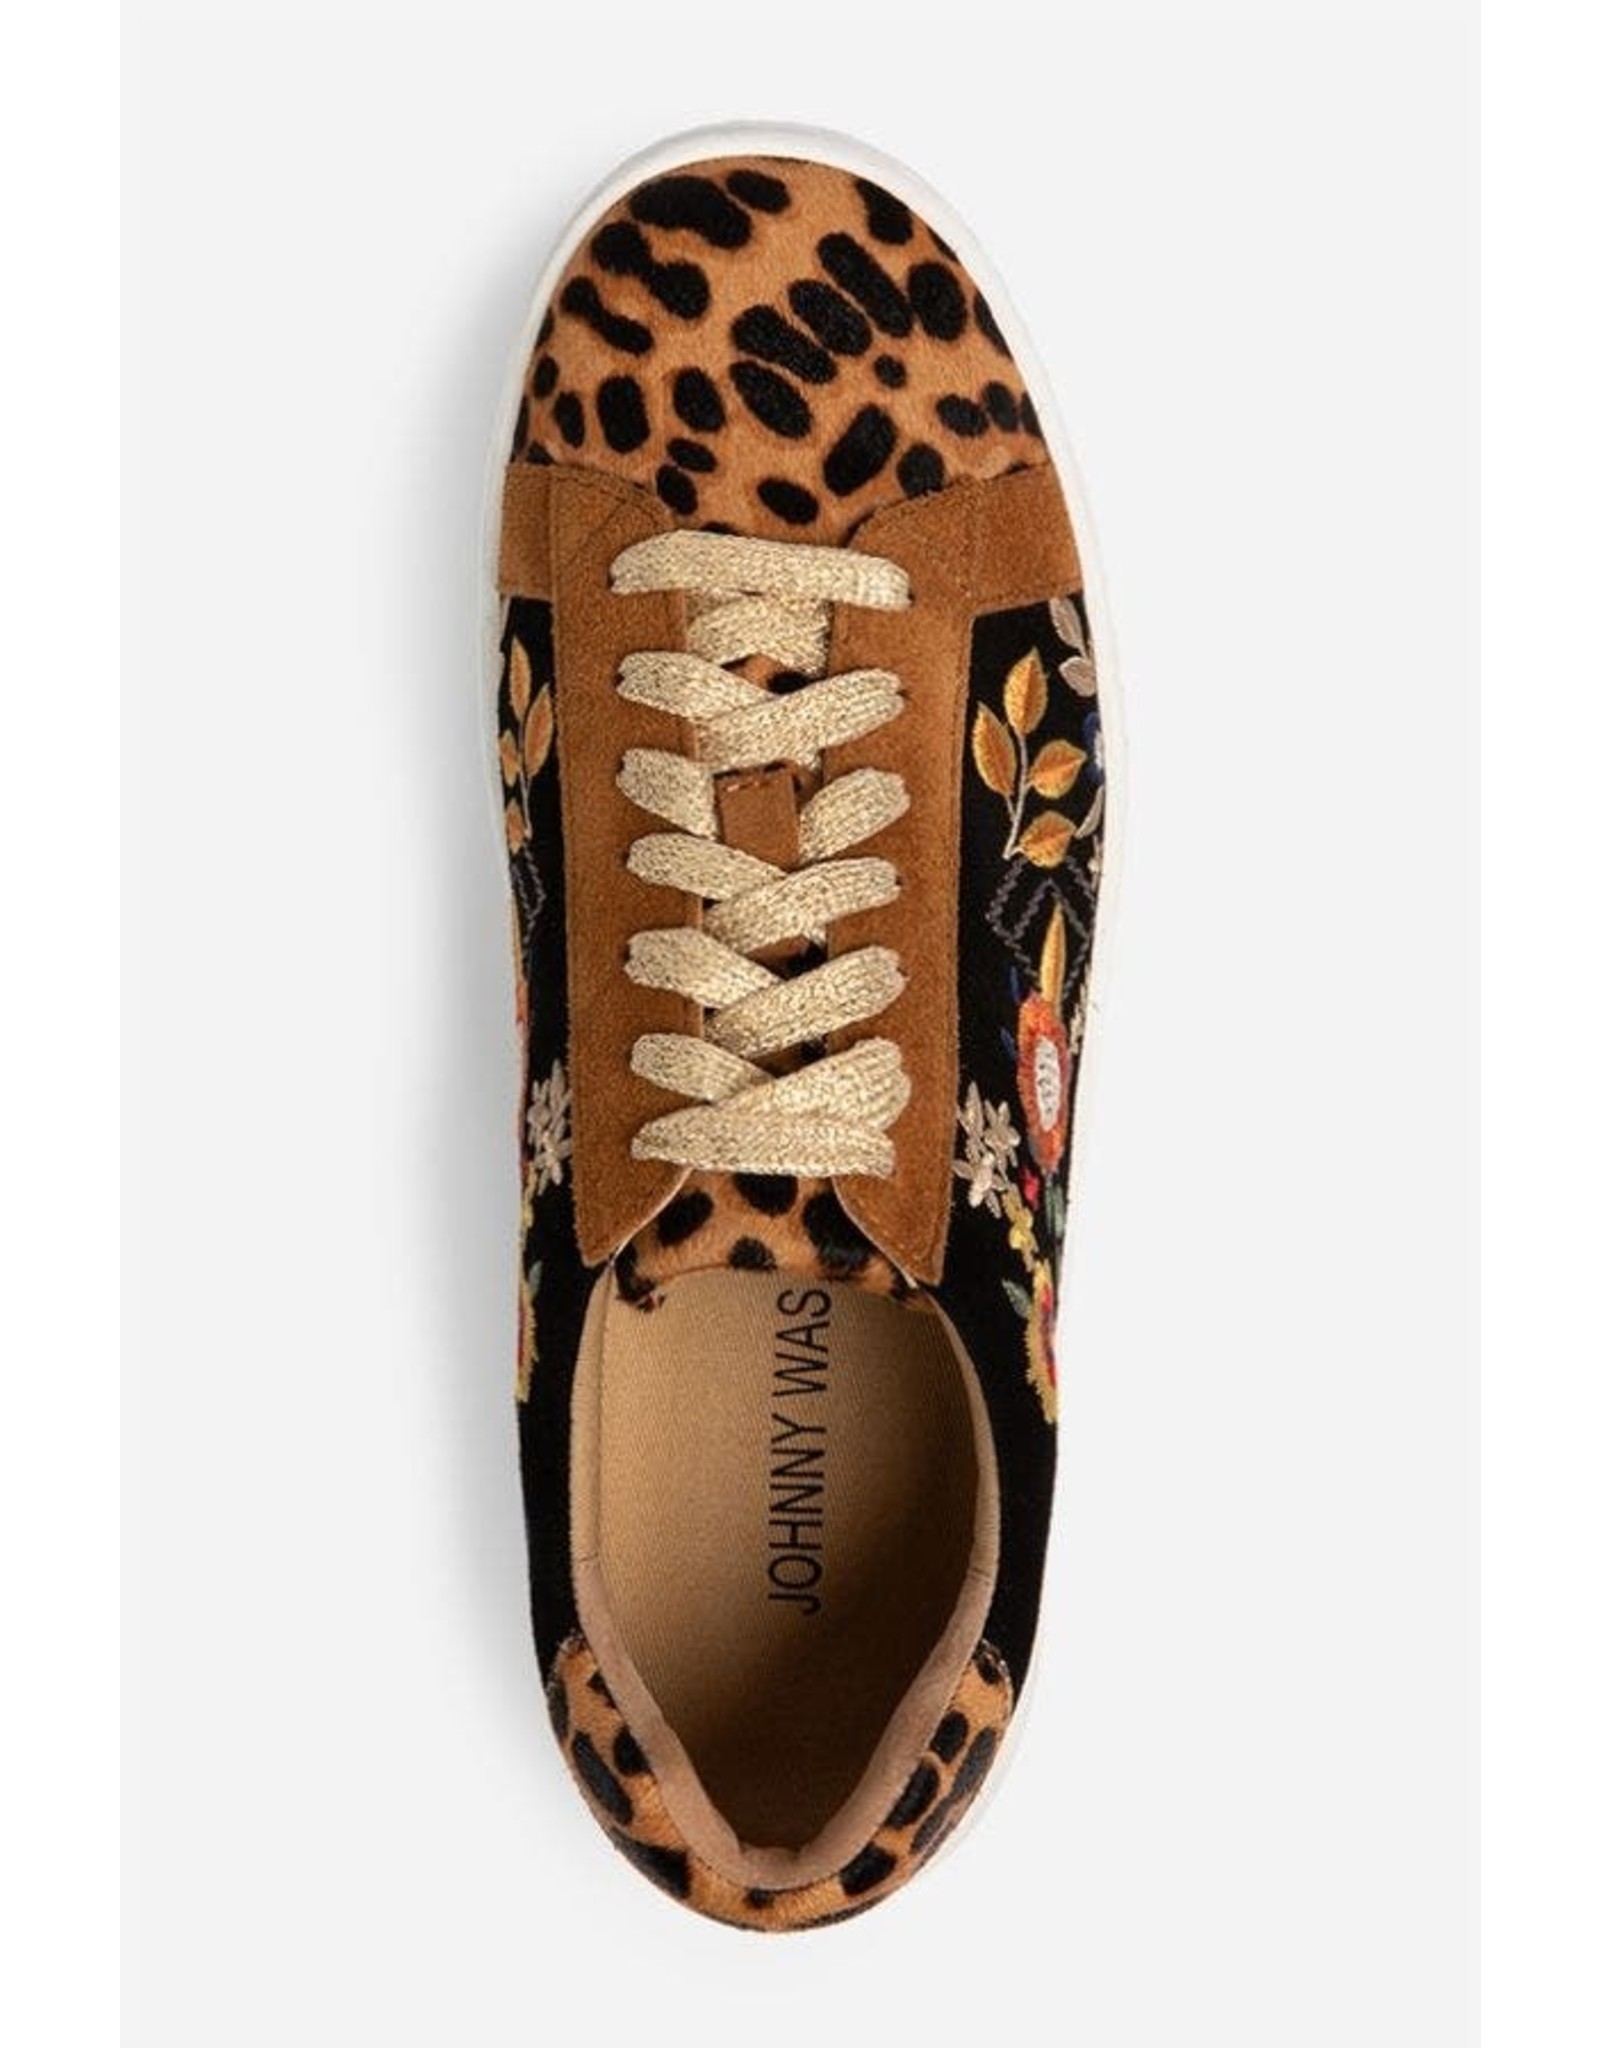 johnny was leopard sneakers